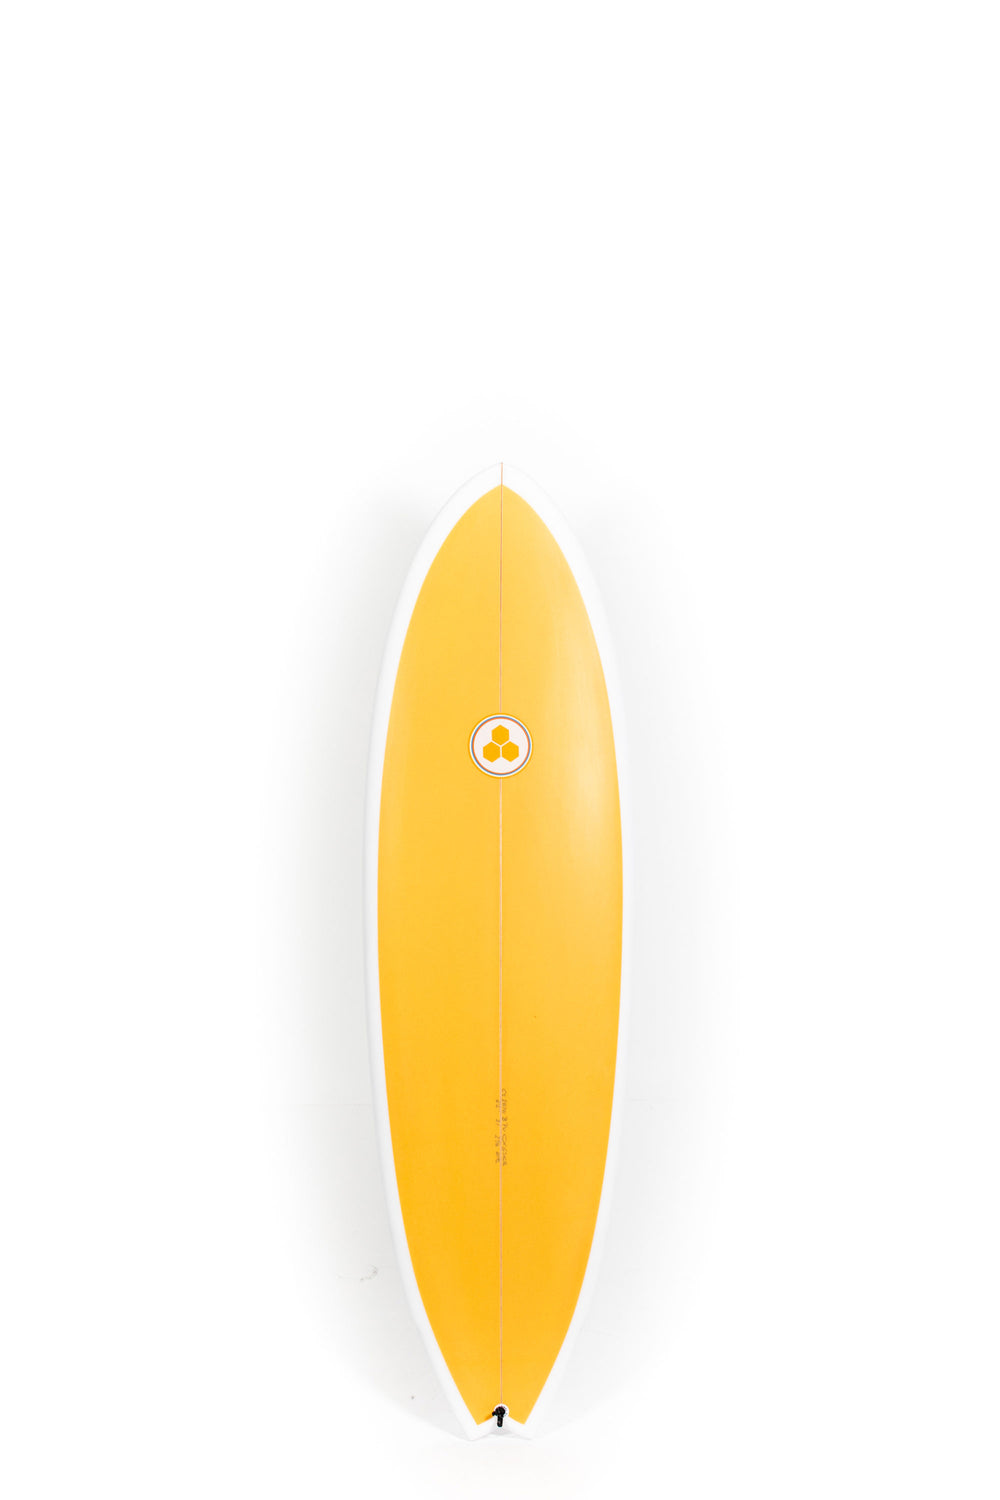 Pukas Surf Shop - Channel Islands - G-Skate by Al Merrick - 6'2